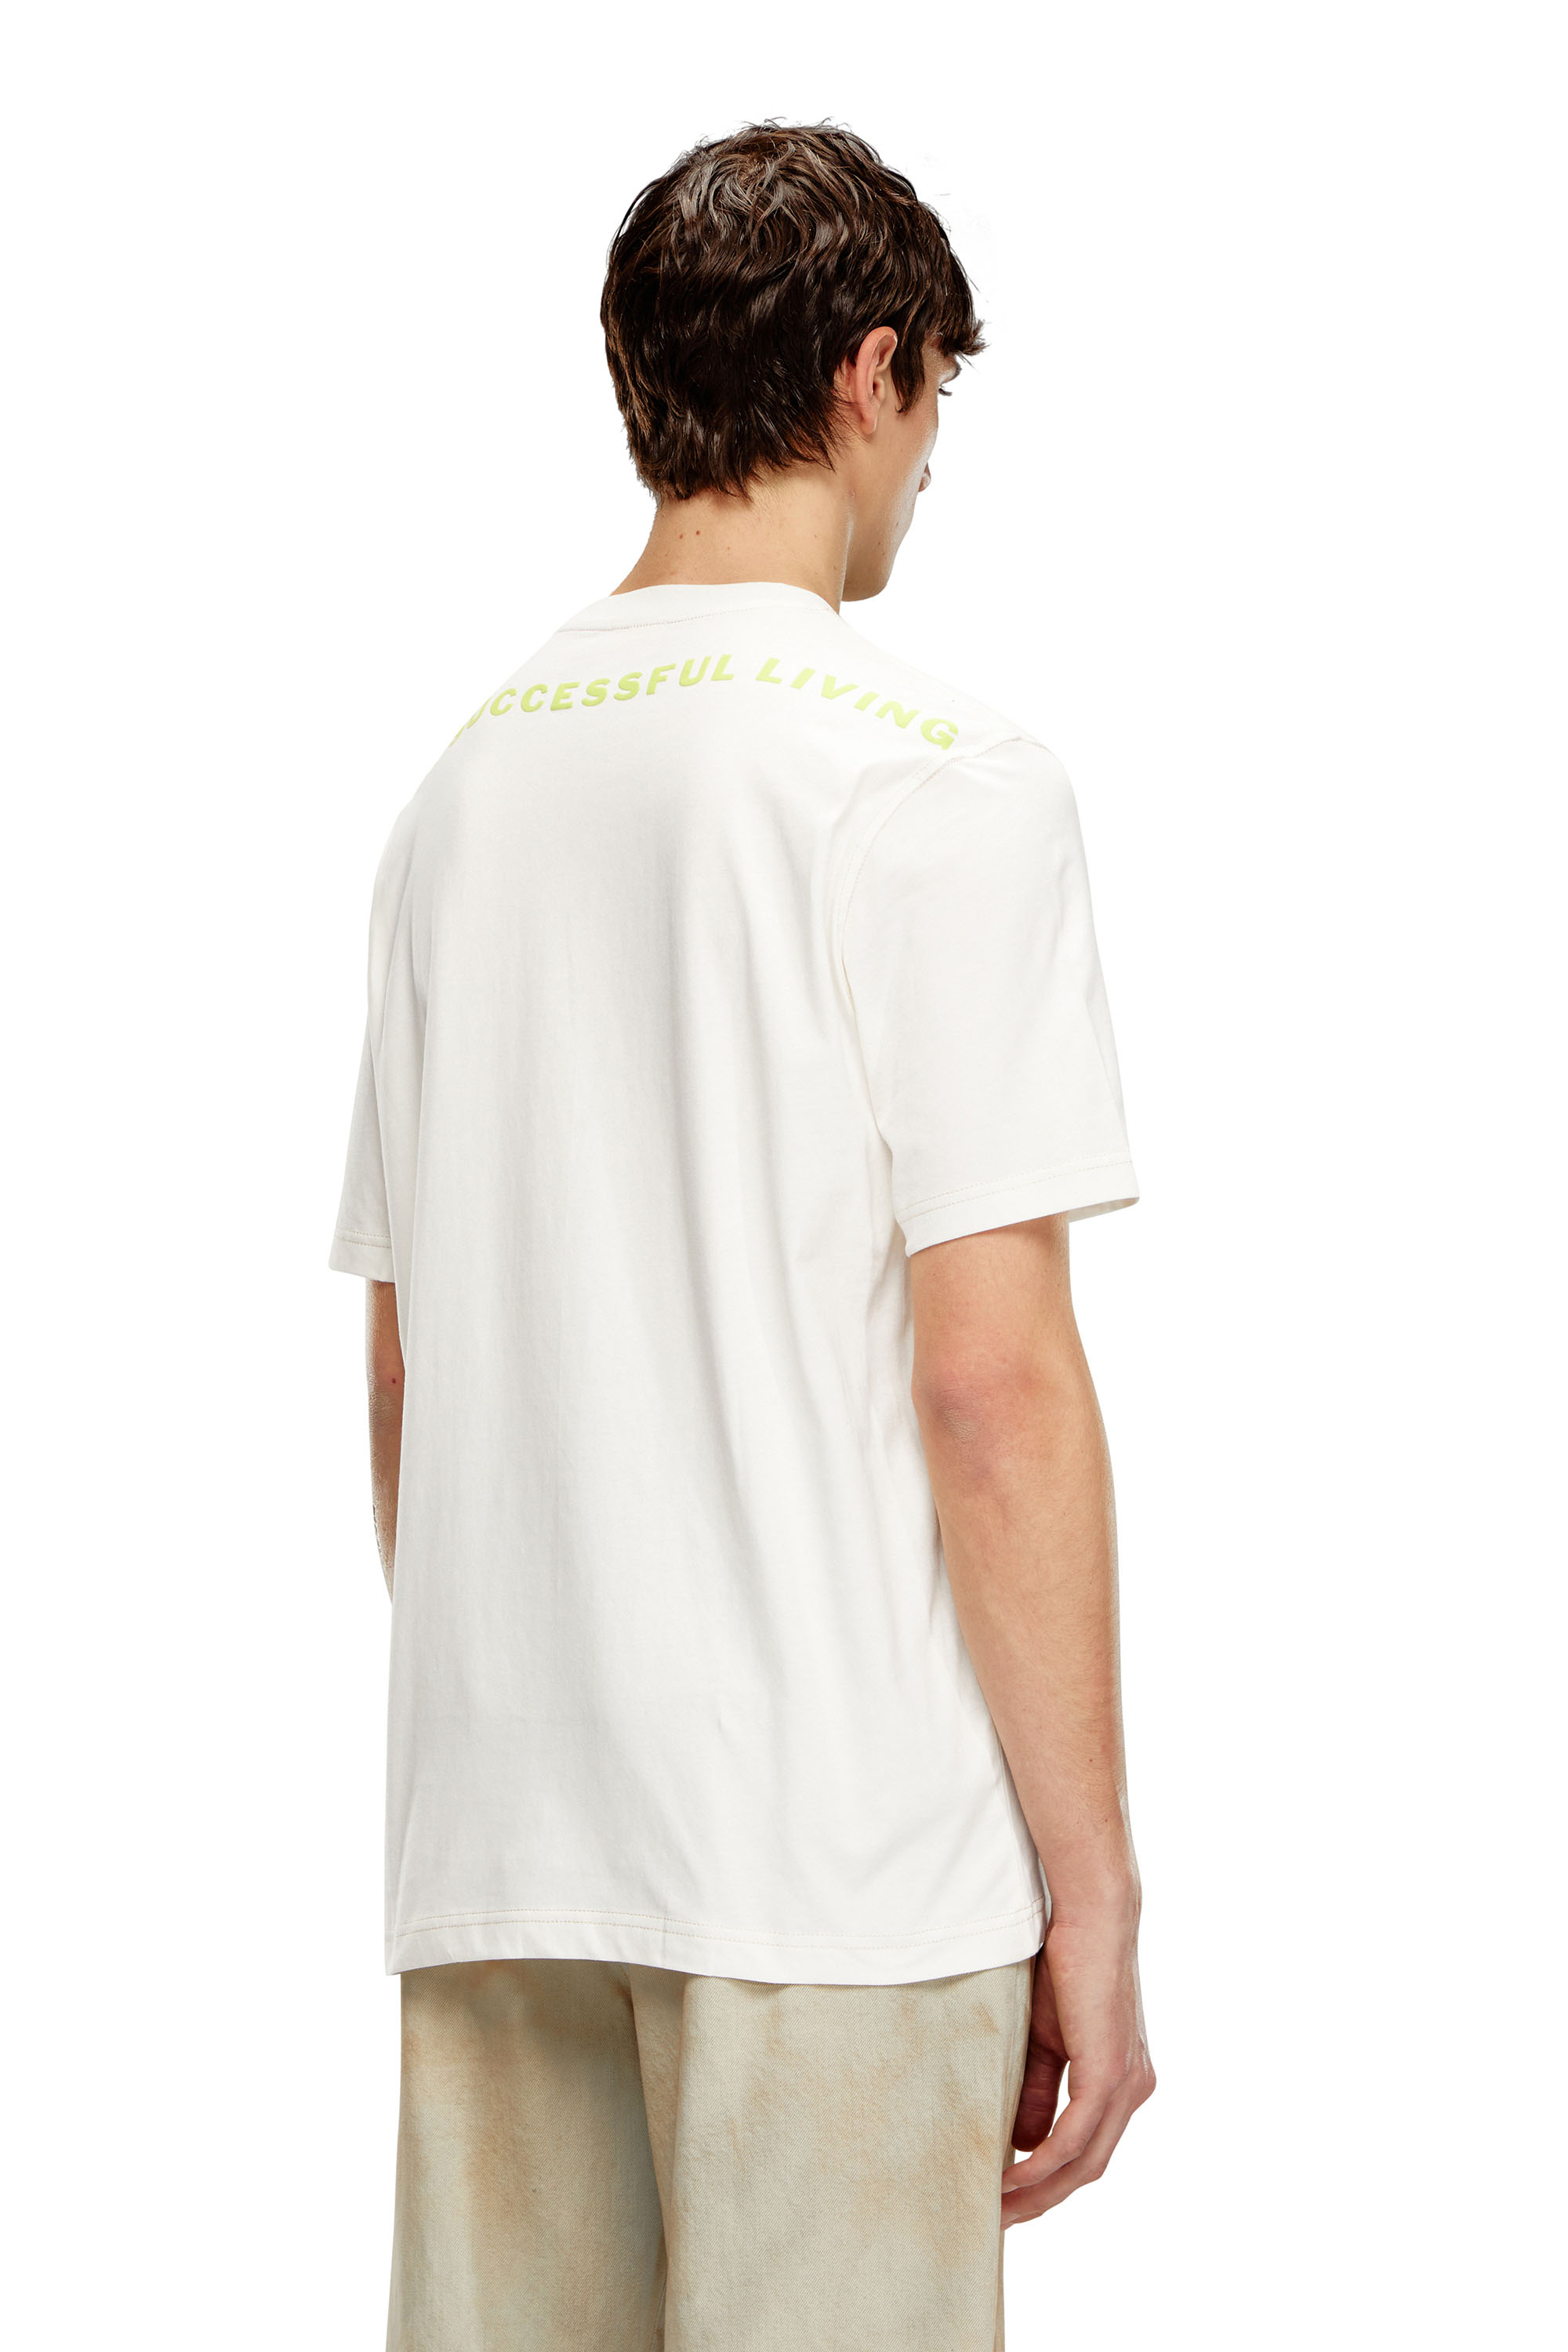 Diesel - T-JUST-N16, Homme T-shirt avec motif camouflage zébré in Blanc - Image 2